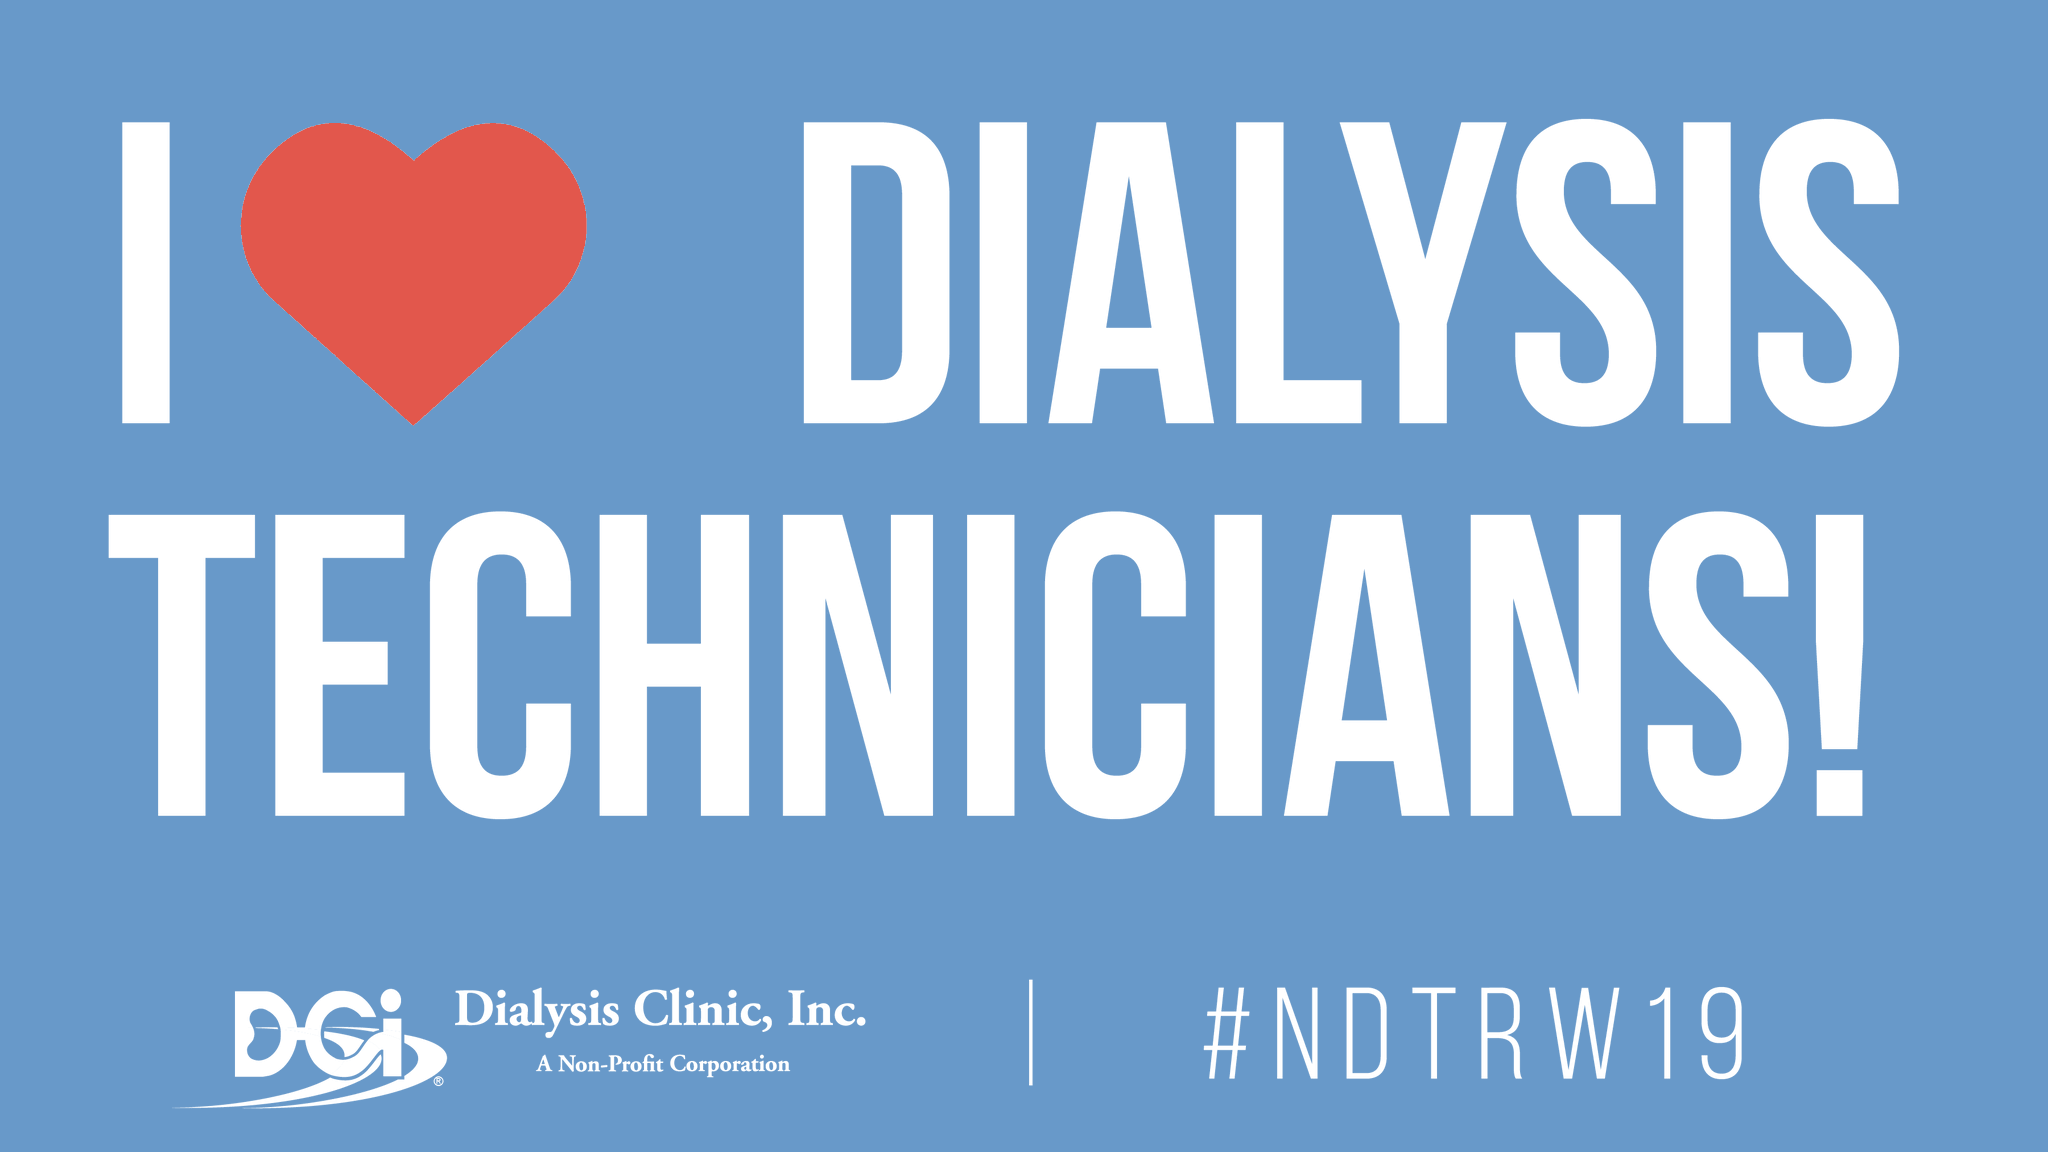 Dialysis Clinic, Inc ❤️ dialysis technicians! Do